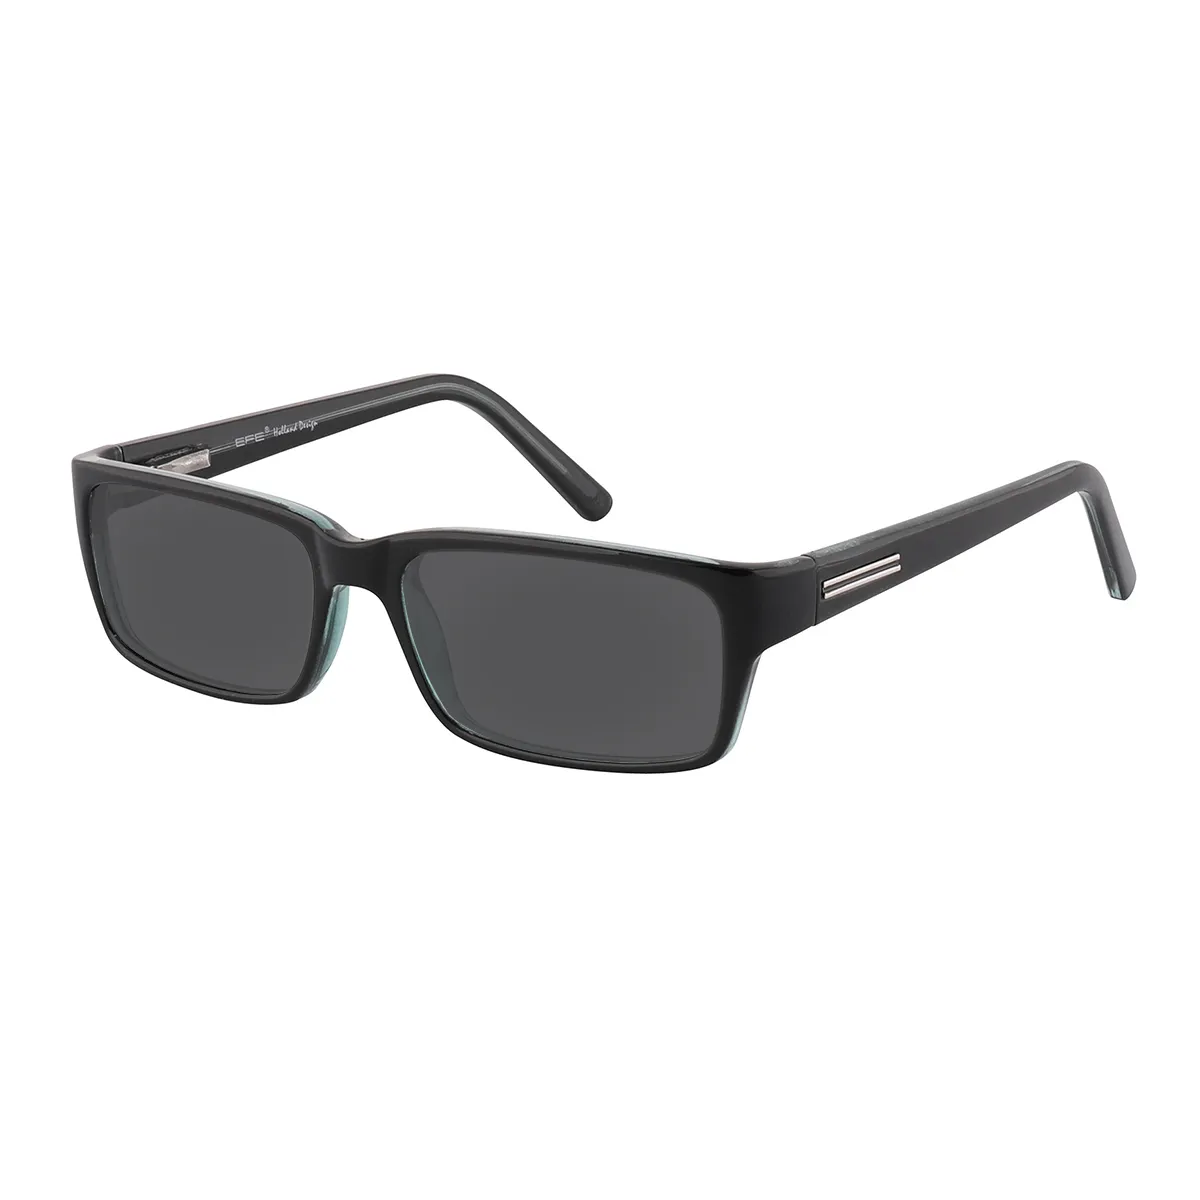 Ardizzone - Rectangle Black-Green Sunglasses for Men & Women